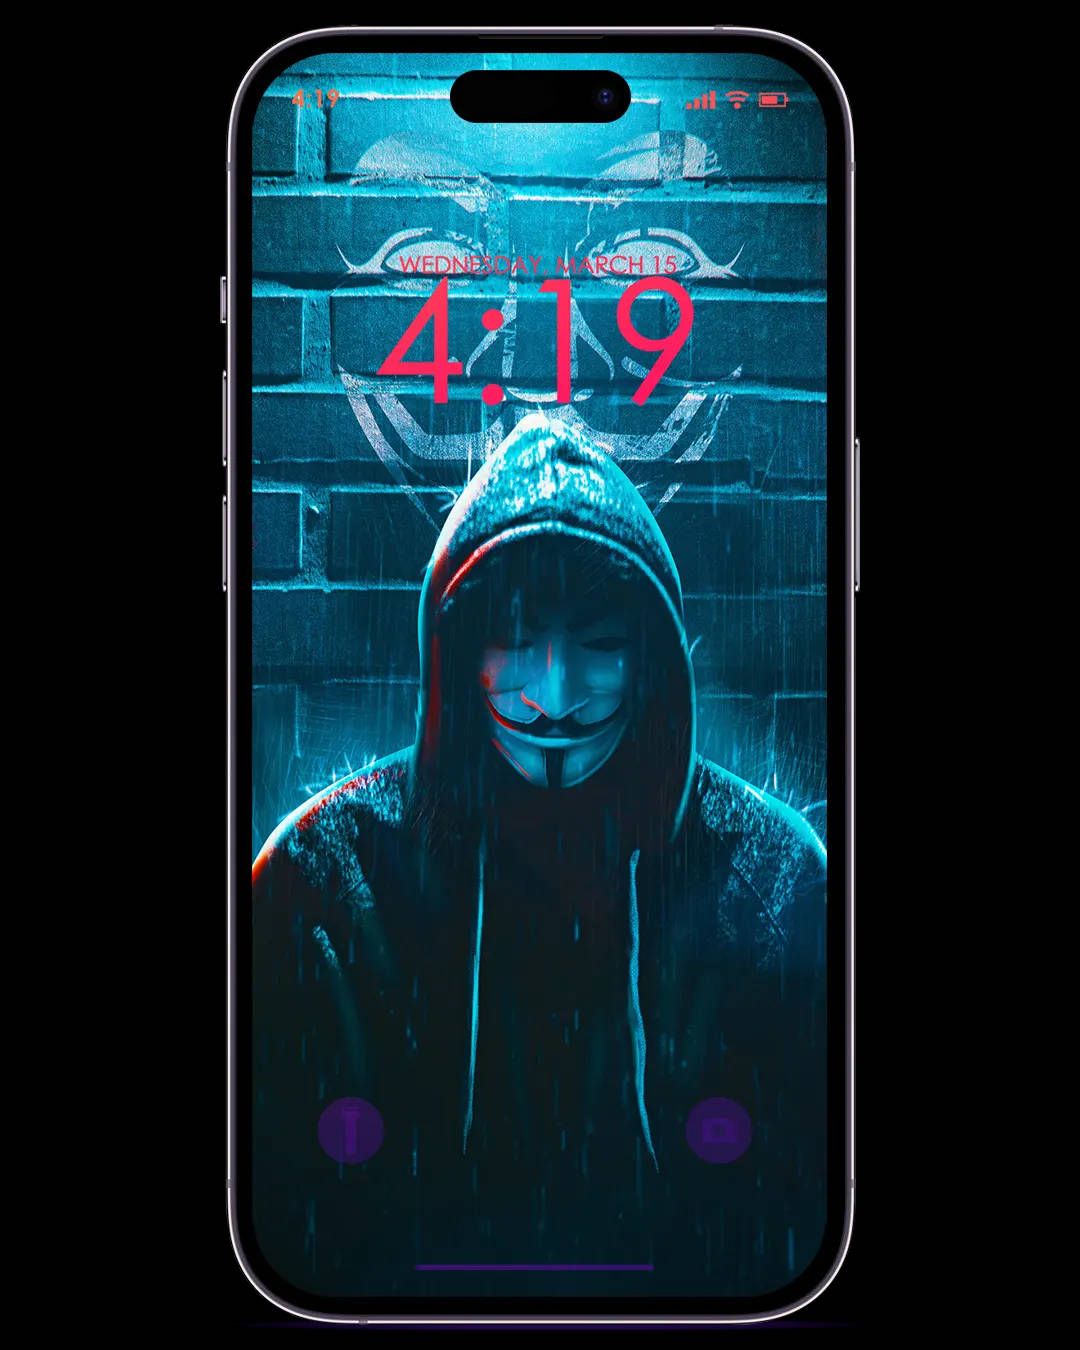 Anonymous Hacker Wednesday Mobile Phone er en ren vægtegning Wallpaper